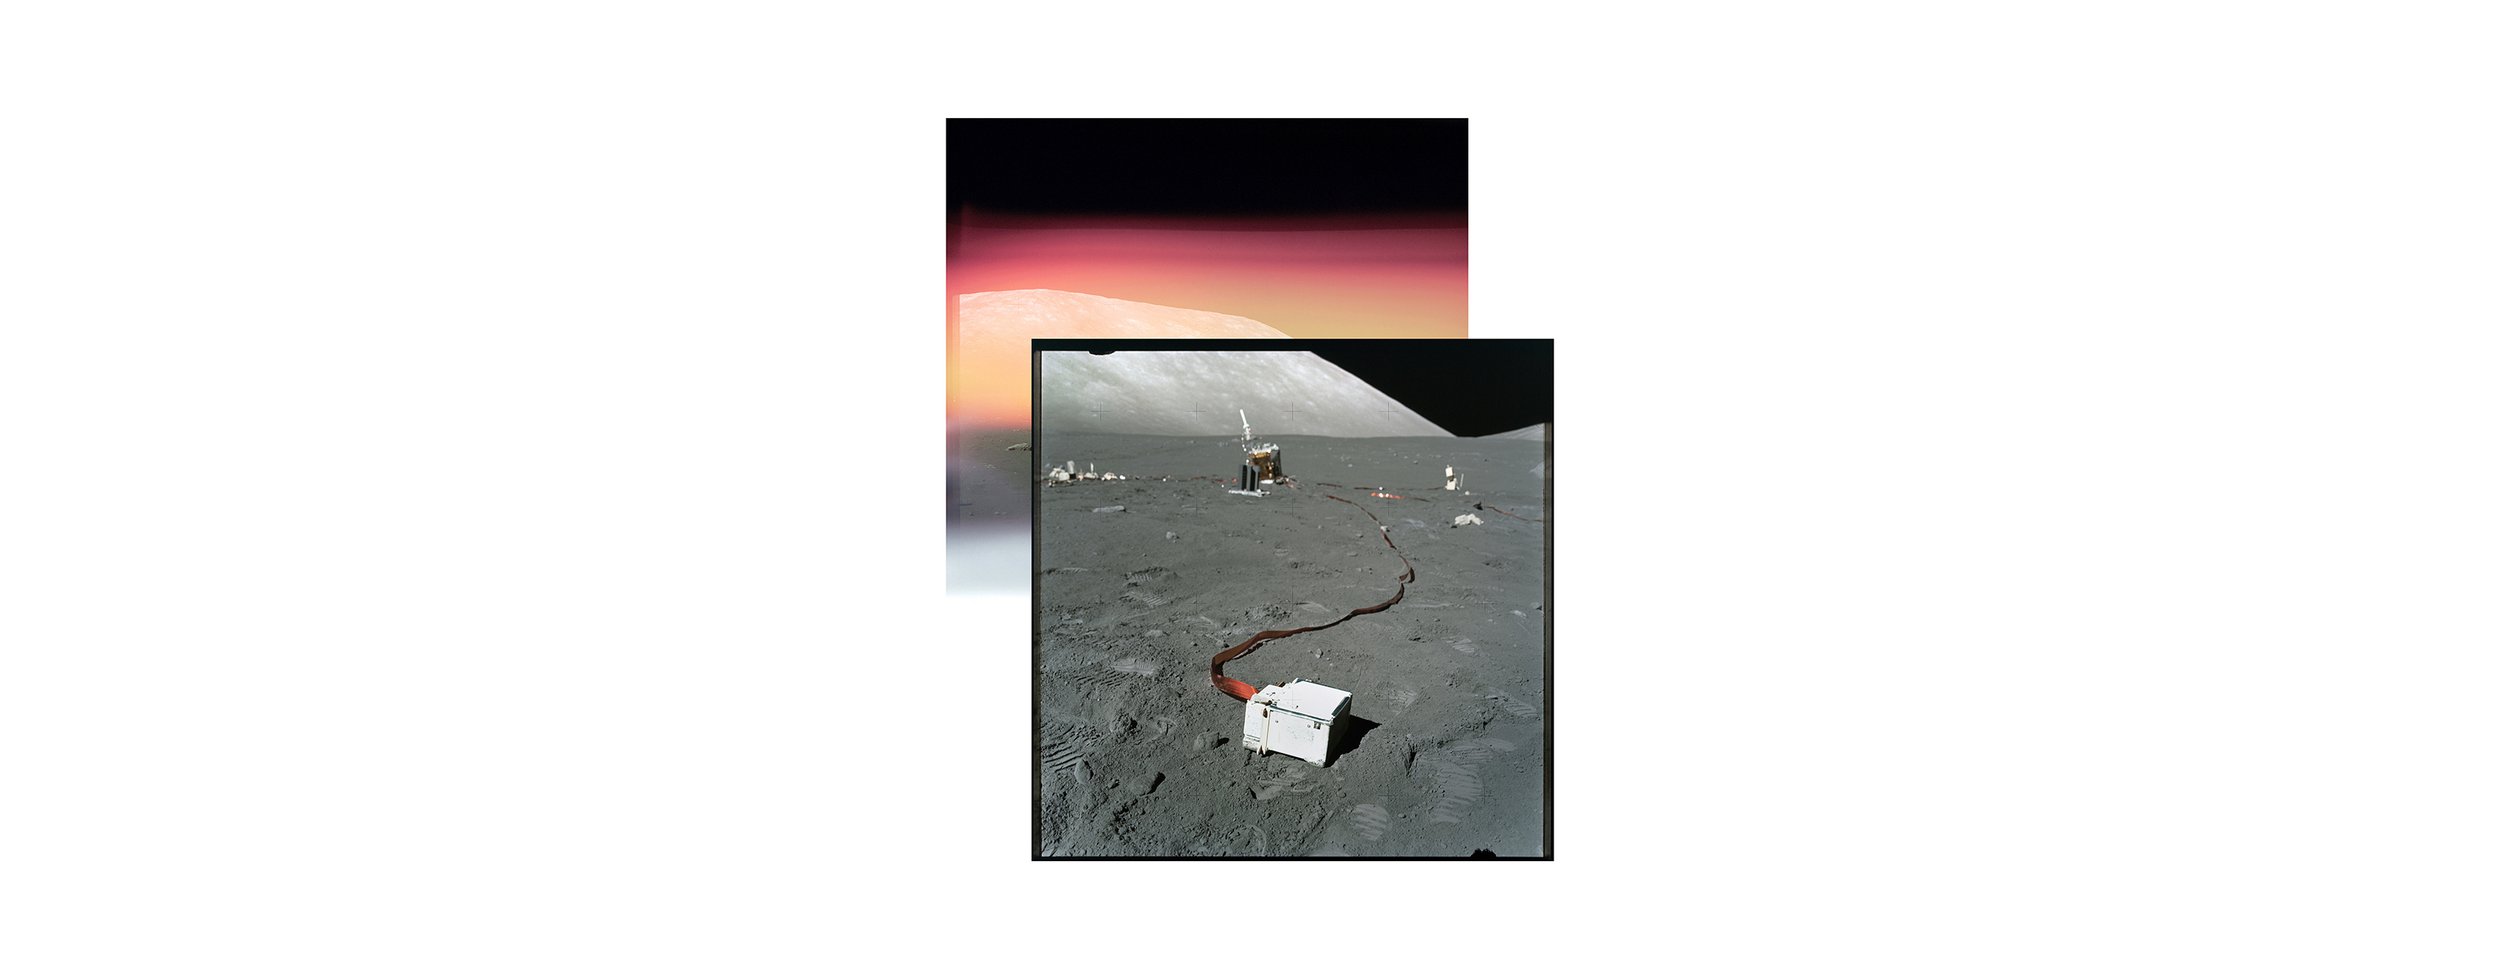  Taurus Mountains, LACE (Lunar Atmospheric Composition Experiment) (75x60)Apollo 17 Magazine 145/D & 134/B - NASA photographs 1972 